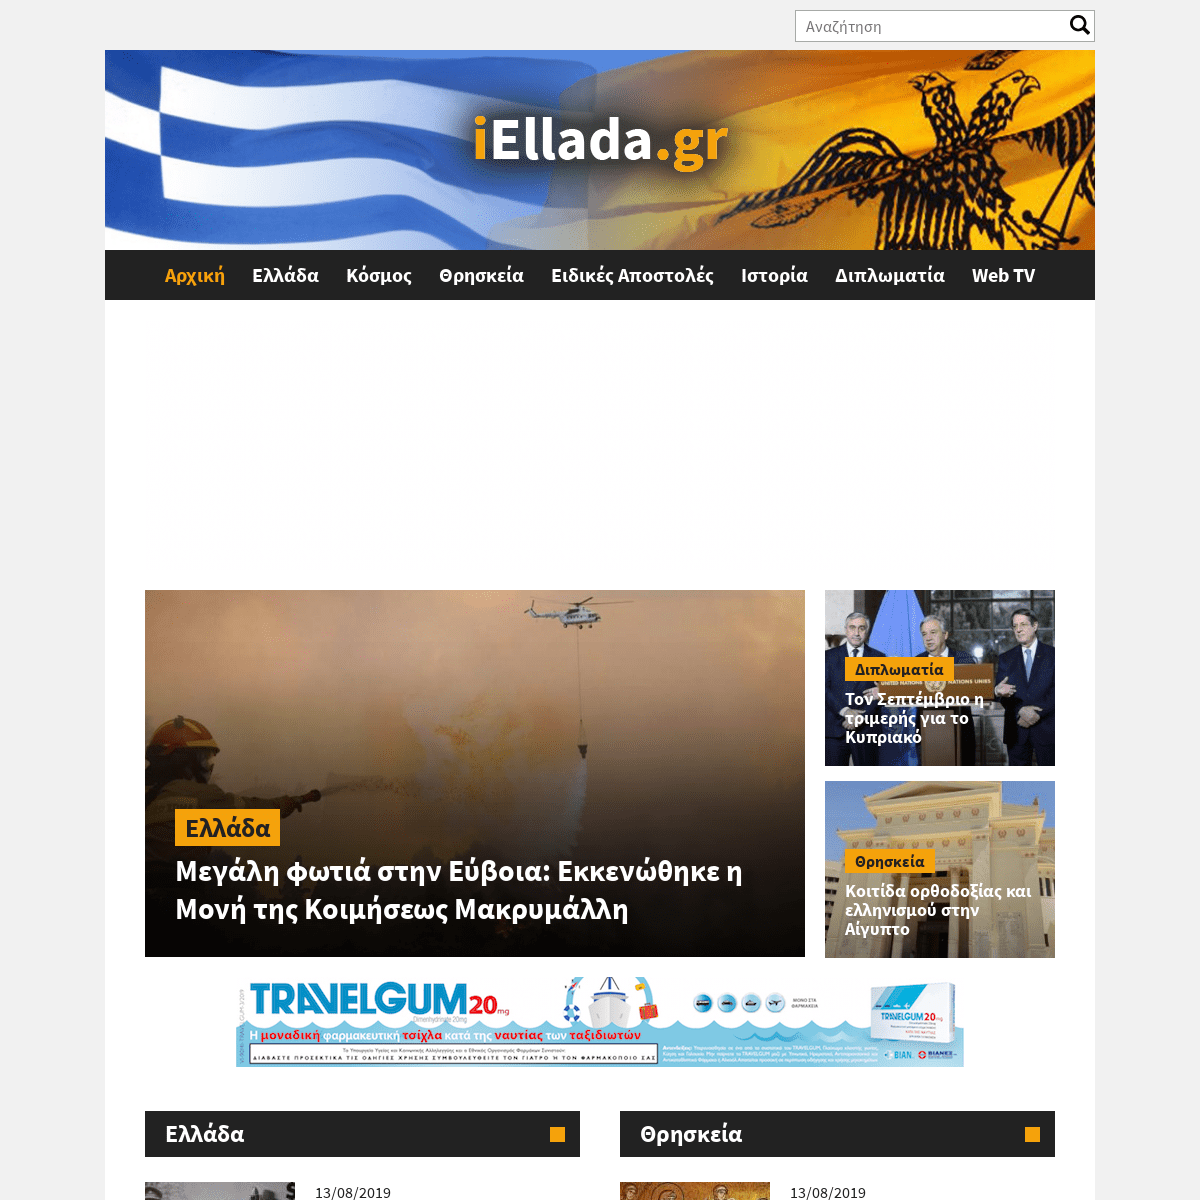 iEllada.gr